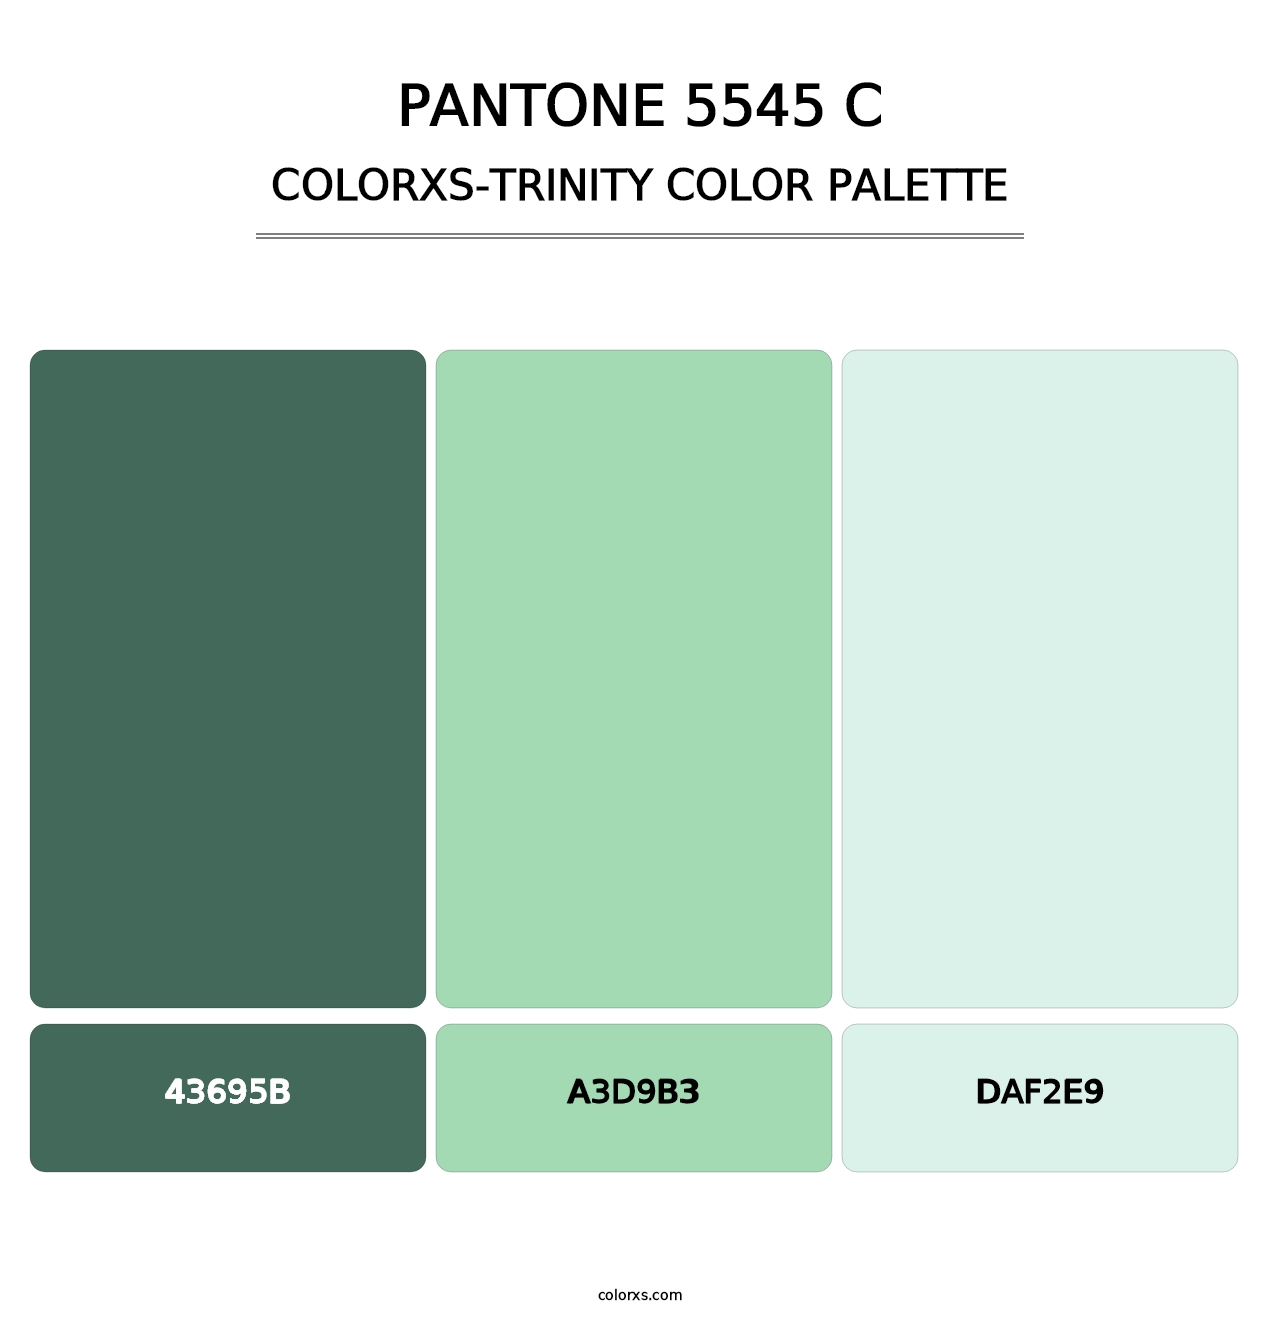 PANTONE 5545 C - Colorxs Trinity Palette